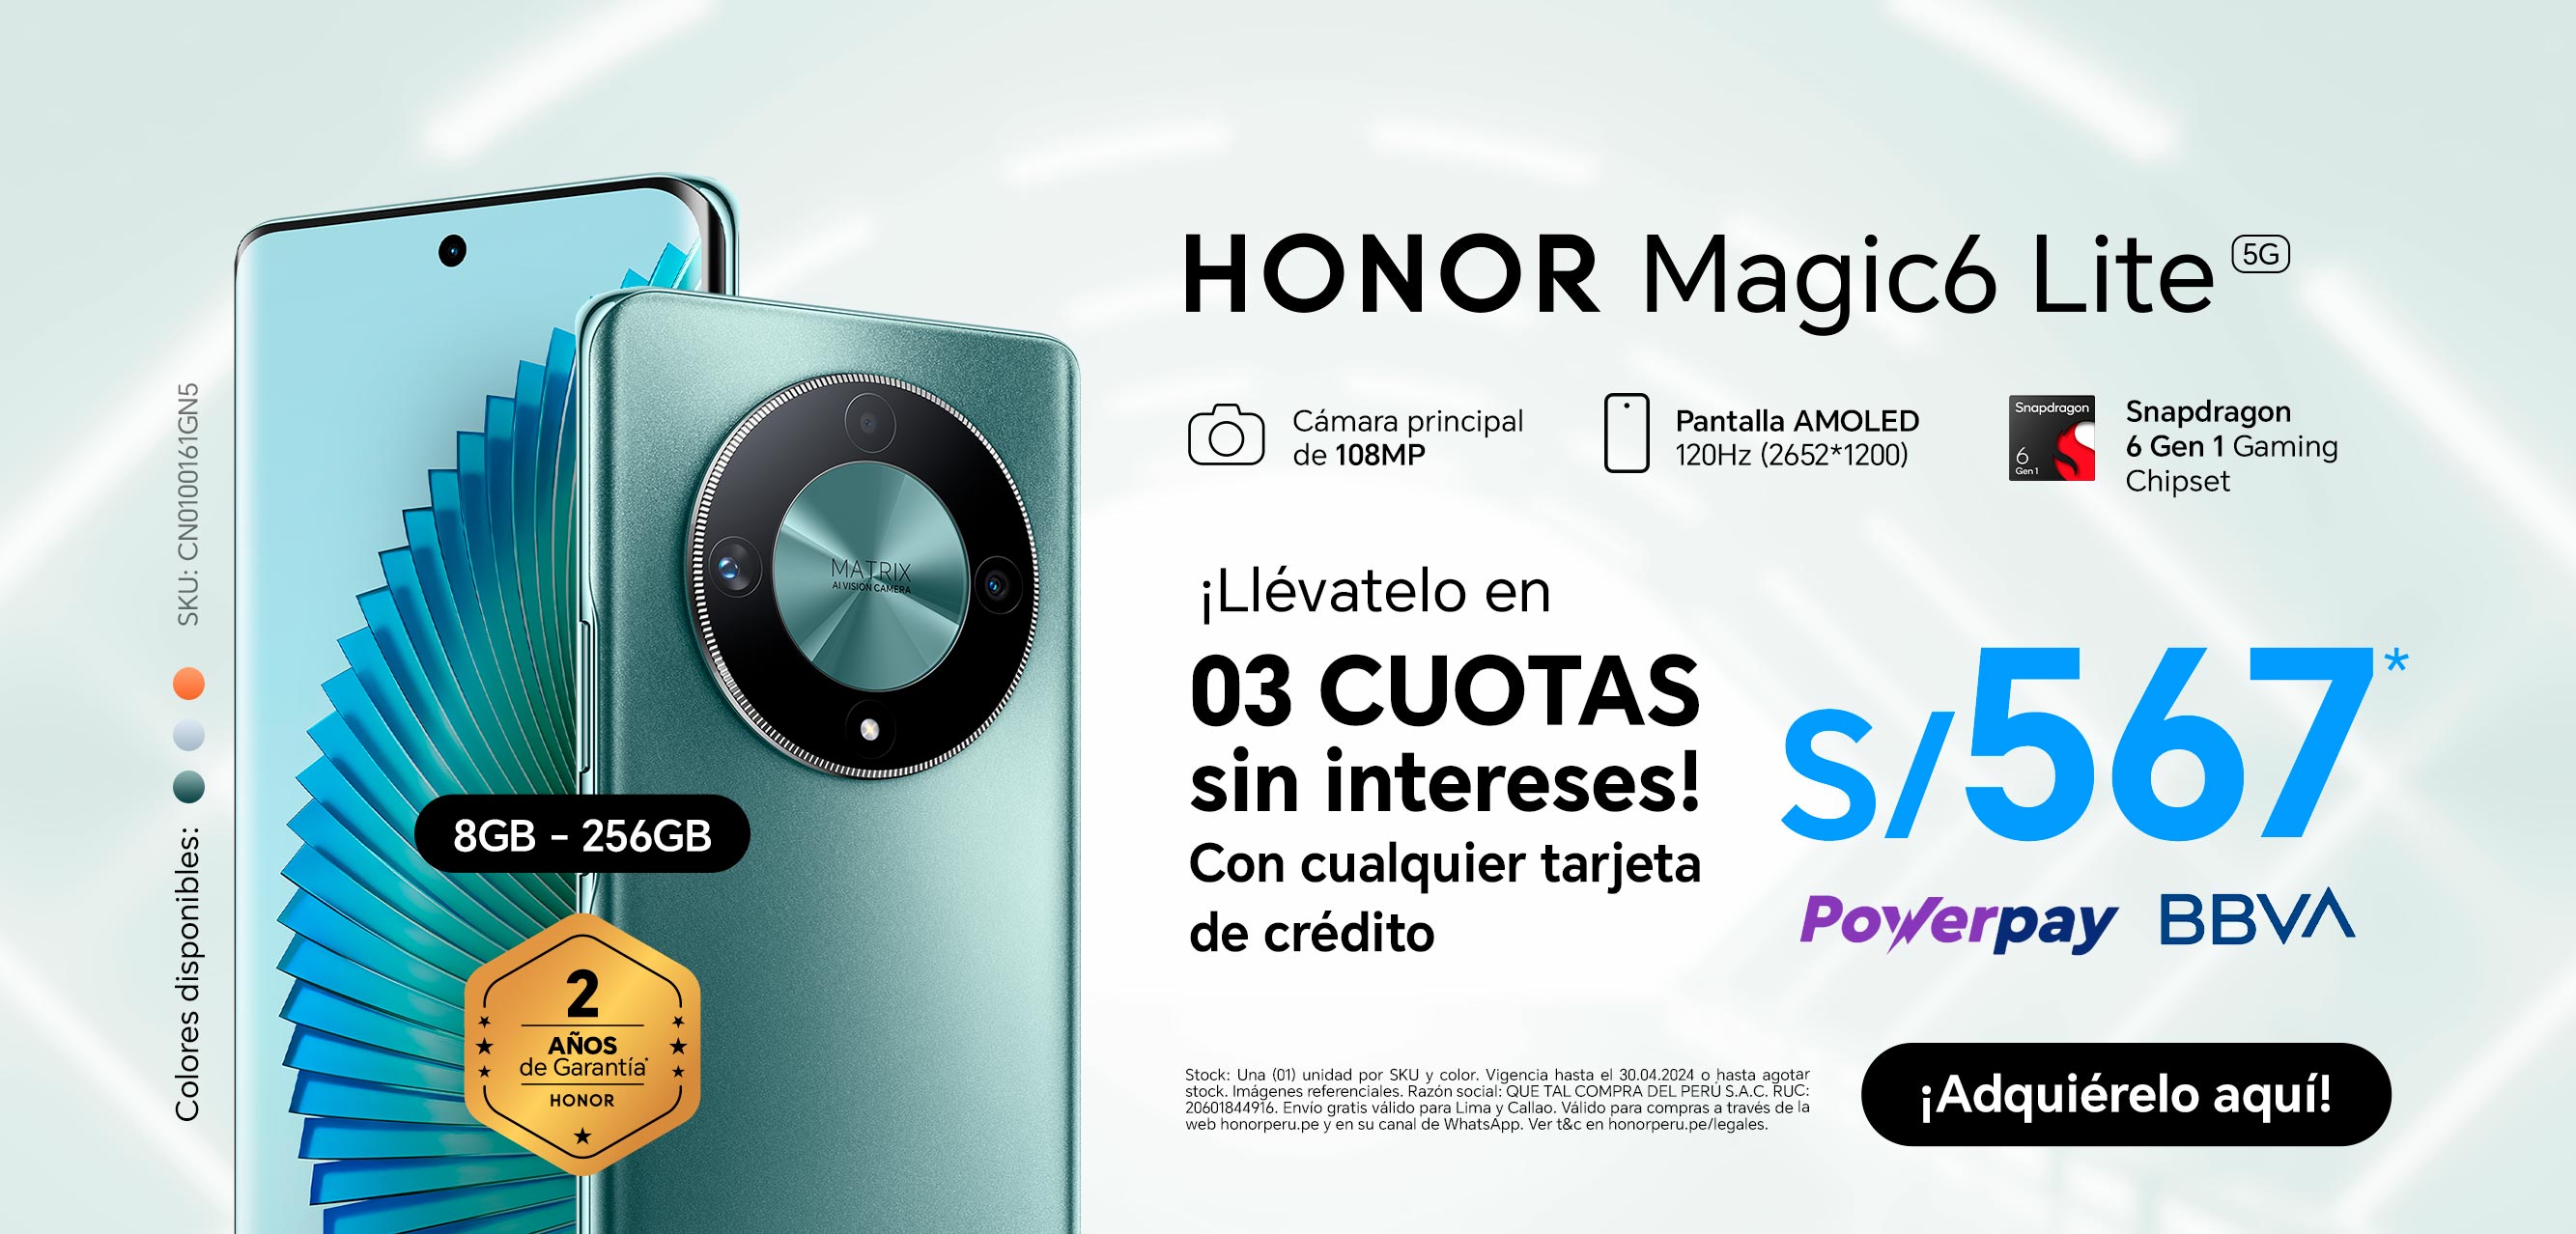 Honor Magic6 Lite